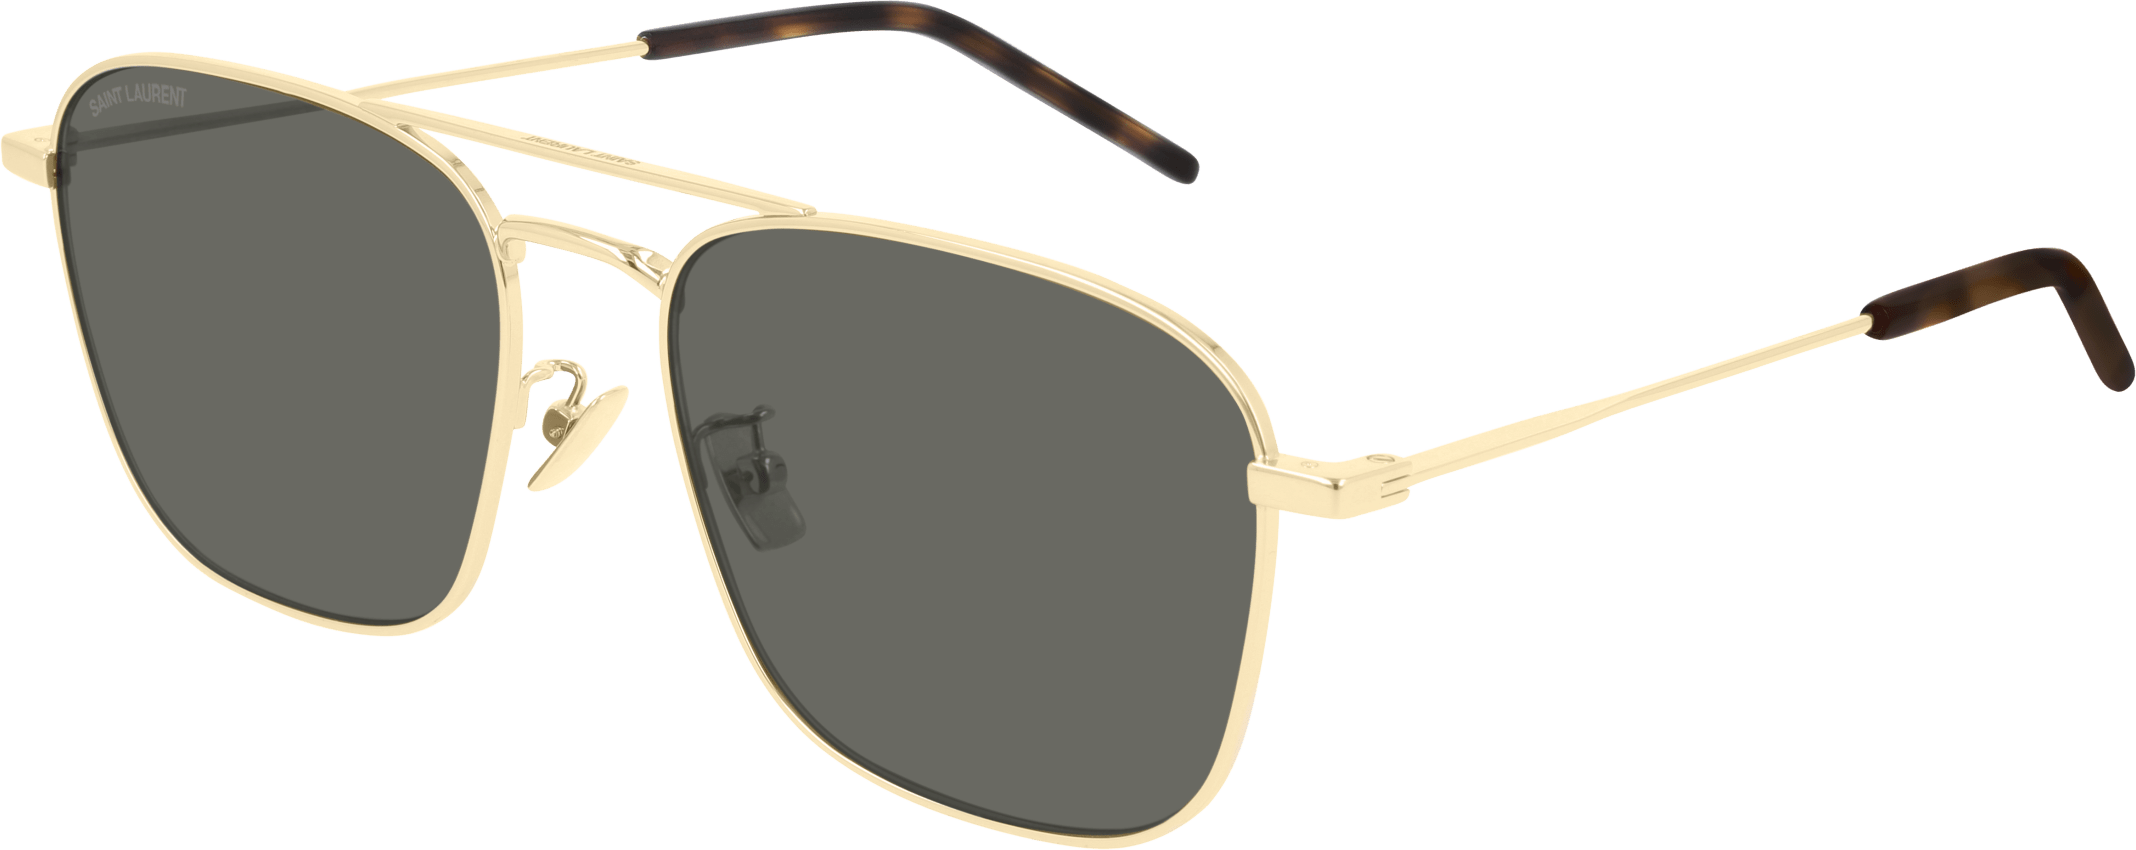 Saint Laurent Metal Sunglasses